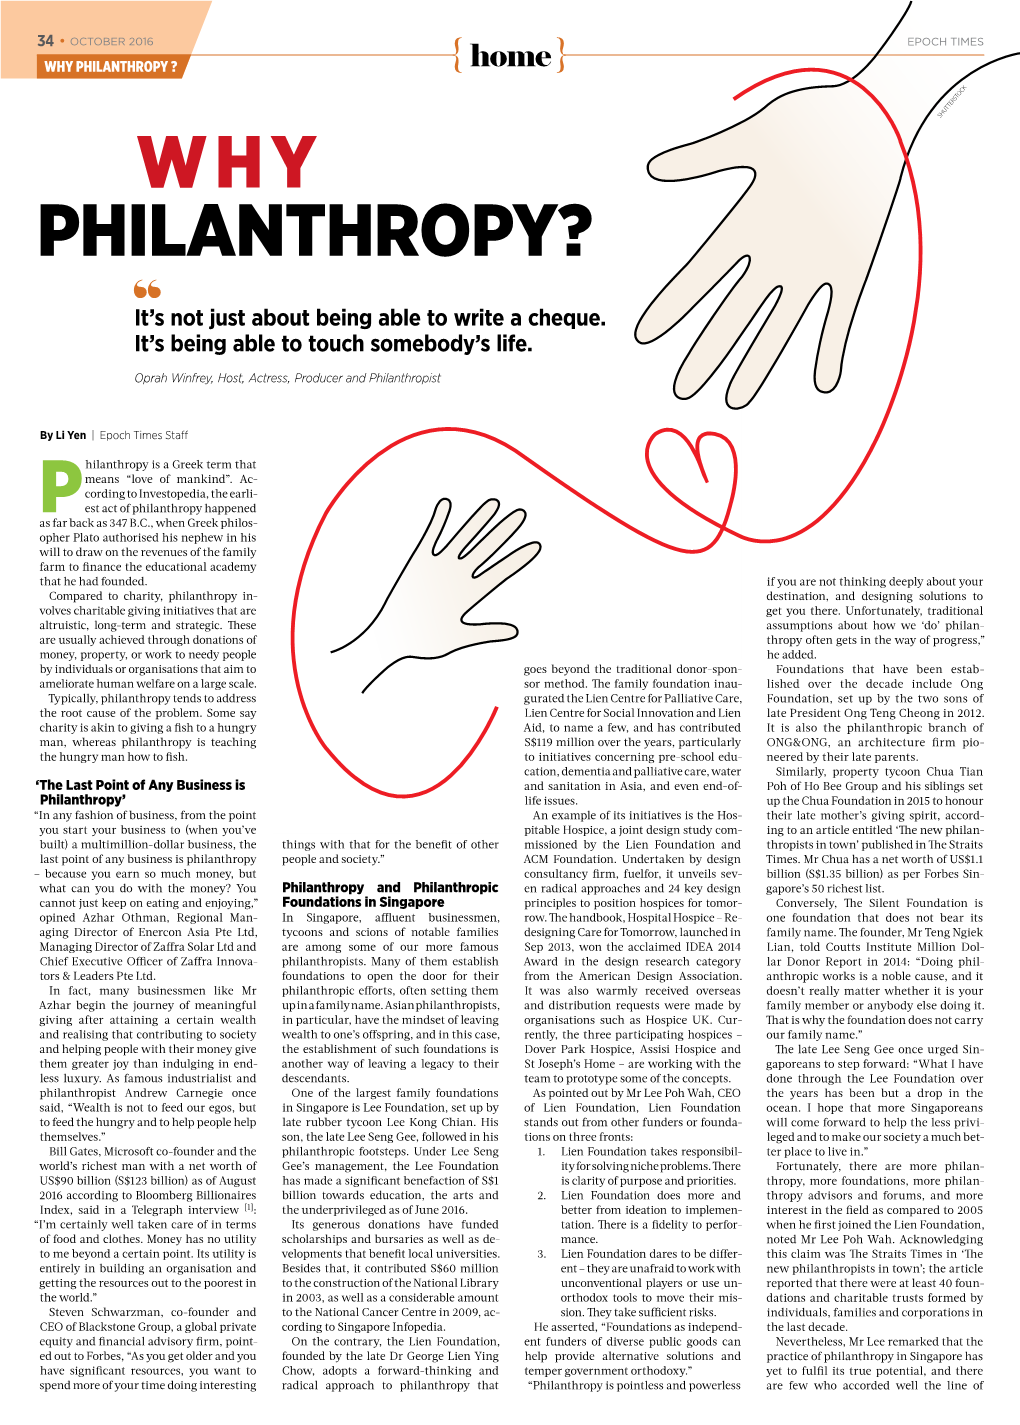 Why Philanthropy?